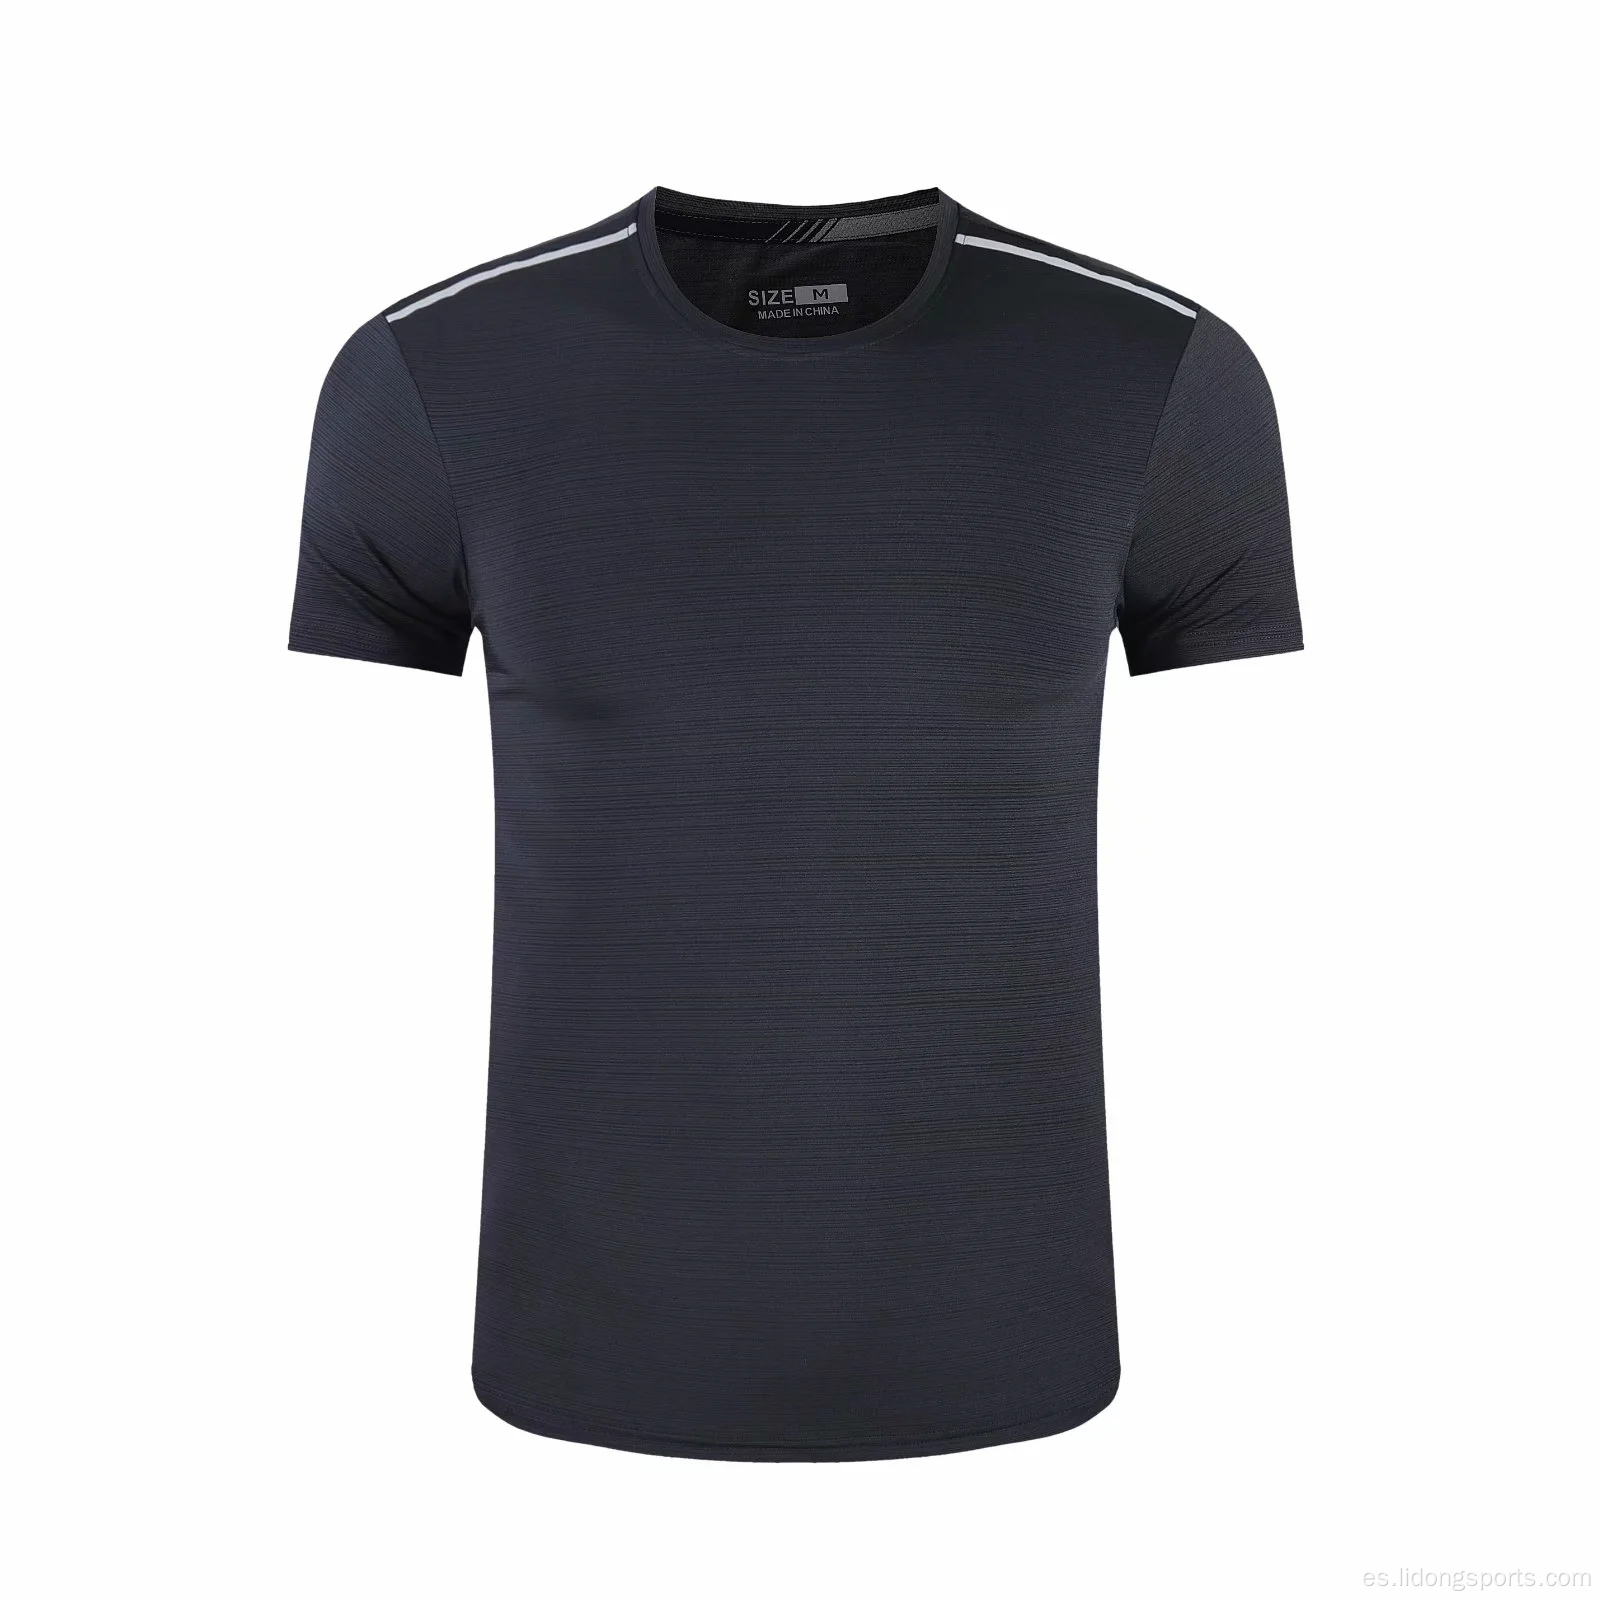 Camiseta de camiseta de calidad para hombres de verano camisetas reflectantes reflectantes